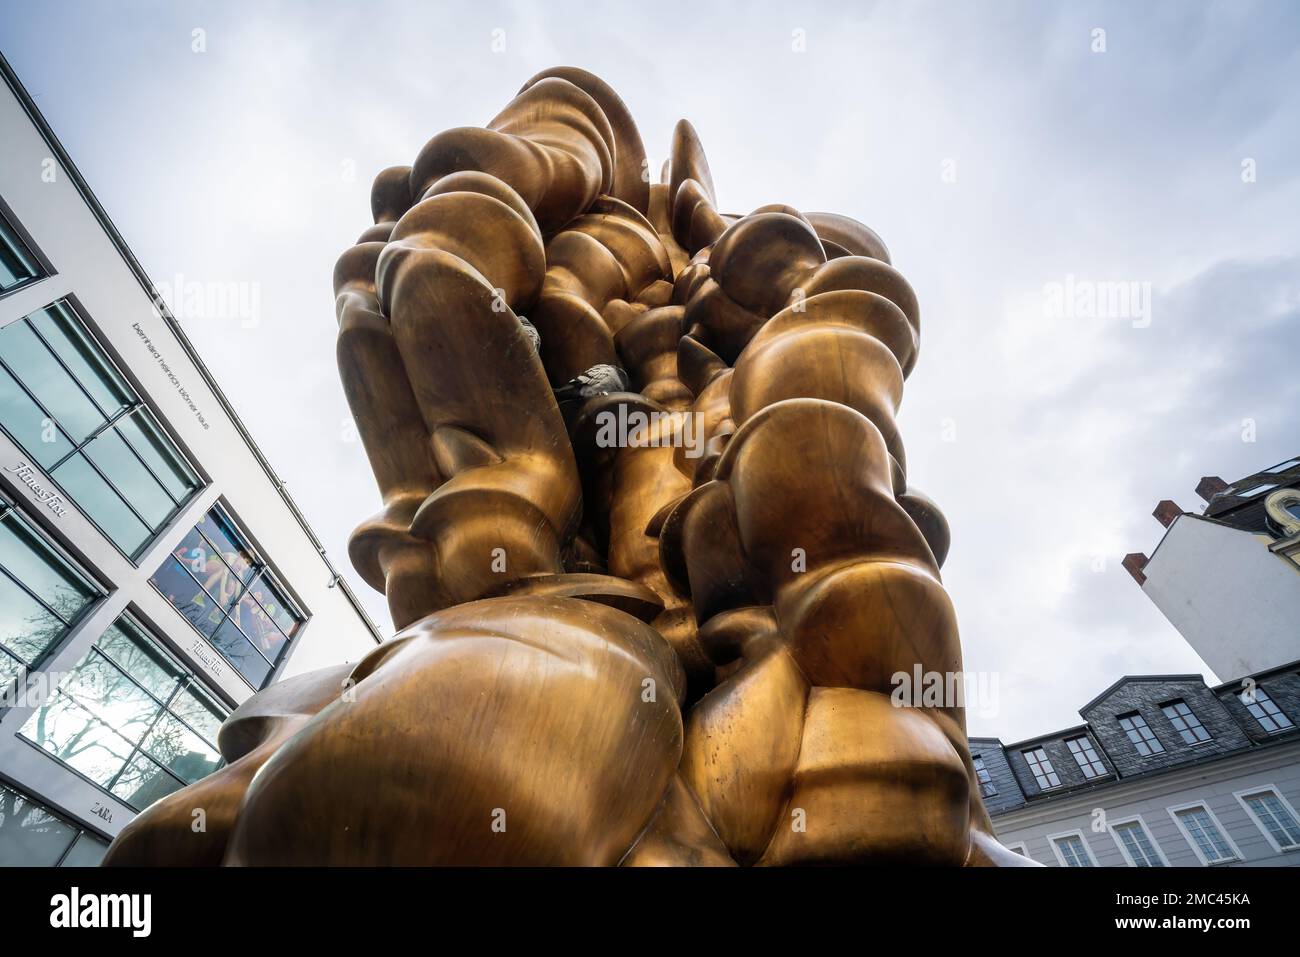 Mean Average Sculpture by Tony Cragg, 2014 at Remigiusplatz - Bonn, Germany Stock Photo